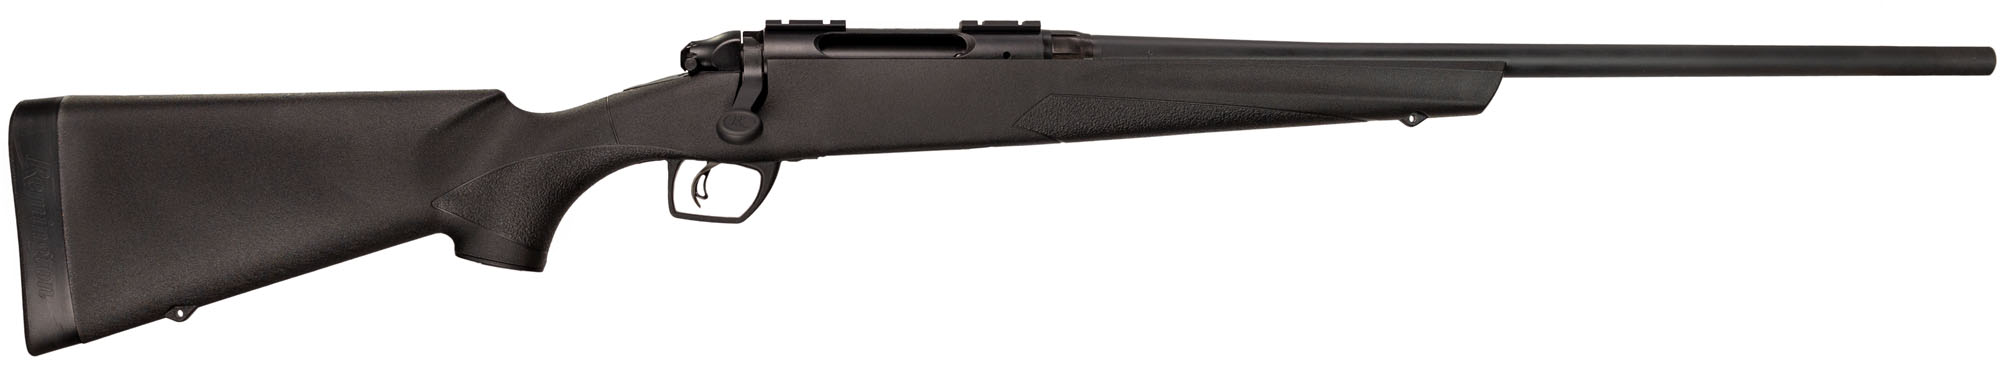 Rifle de cerrojo REMINGTON 783 Compact - 308 Win.